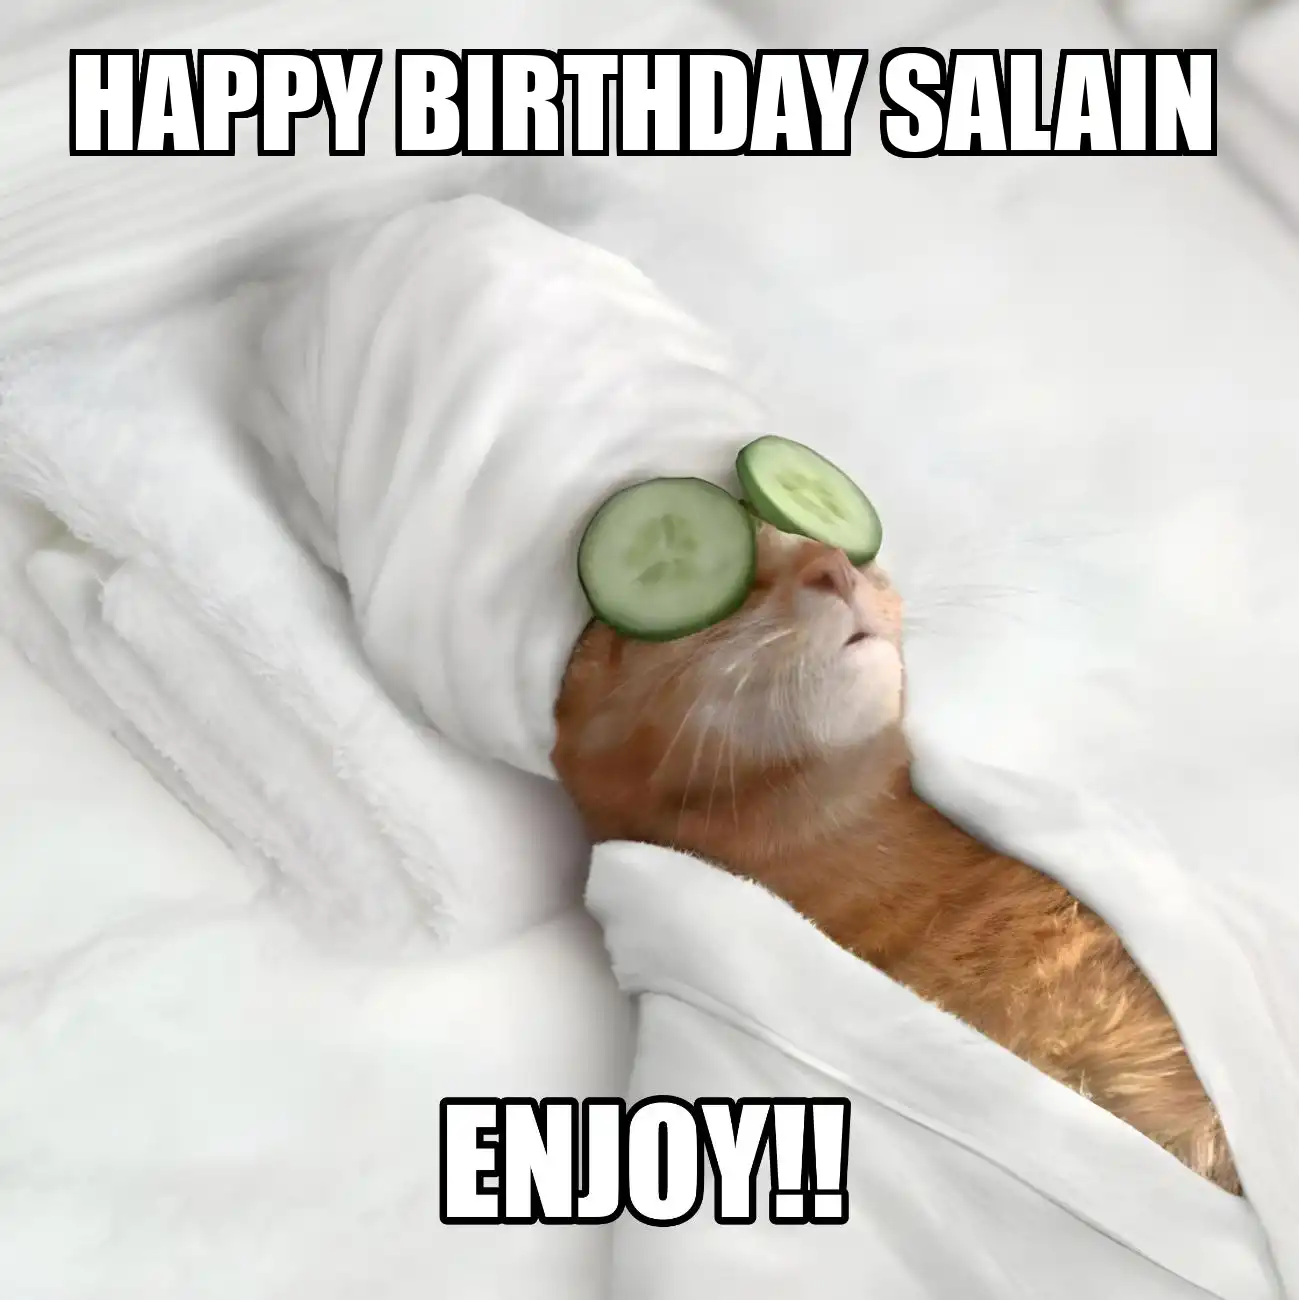 Happy Birthday Salain Enjoy Cat Meme